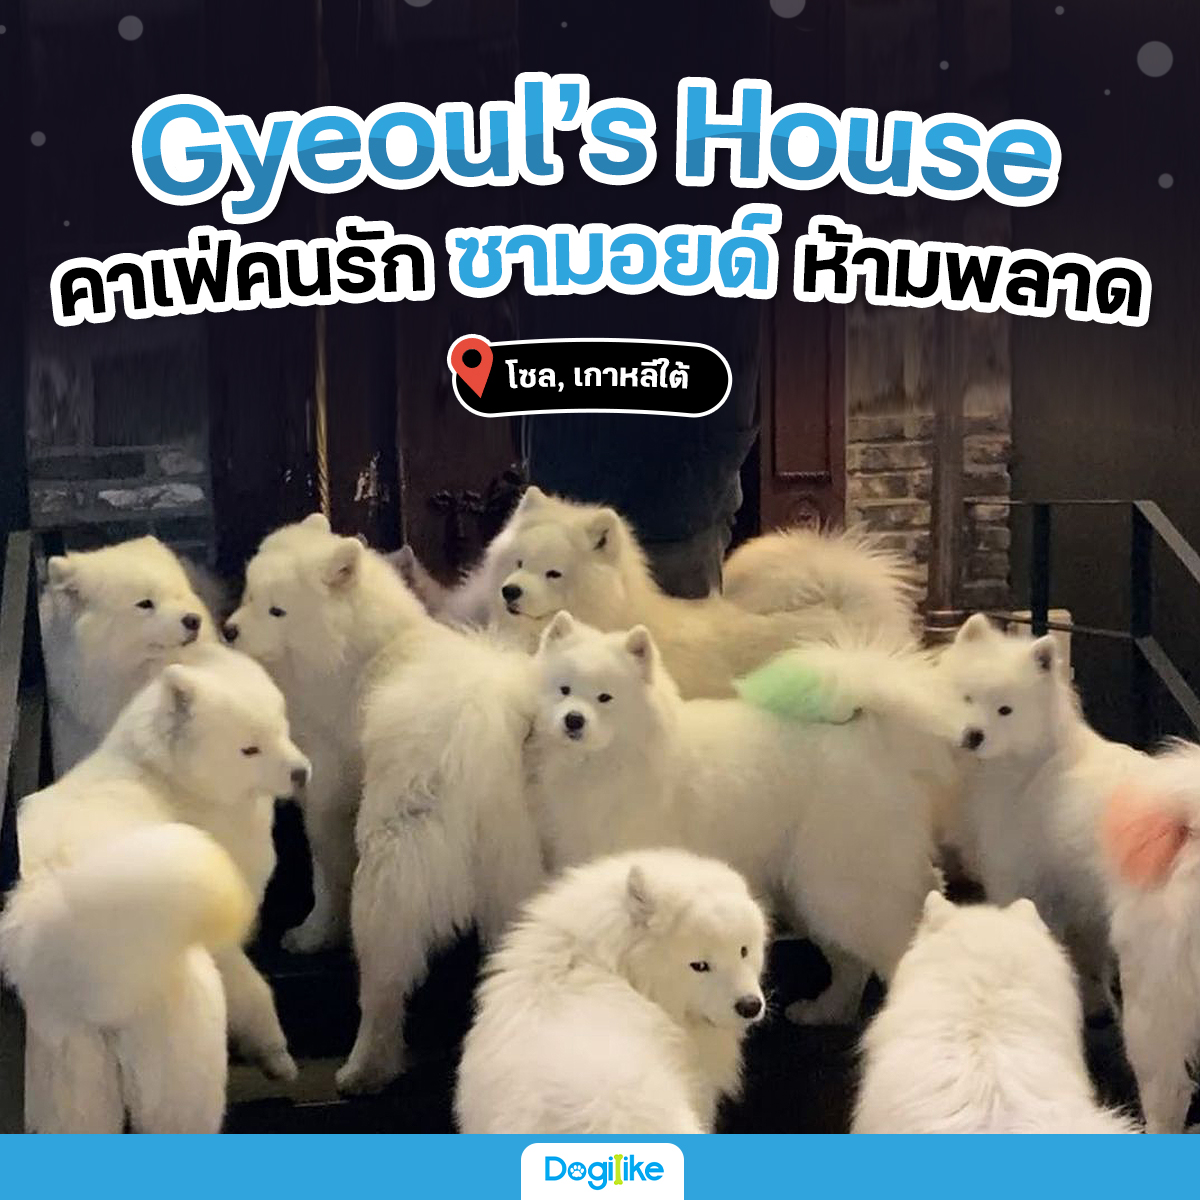 Dogilike.com :: Gyeoul▓s House ╓рЮ©Хкар╚рамб╢ЛбХр╧н╖А╢